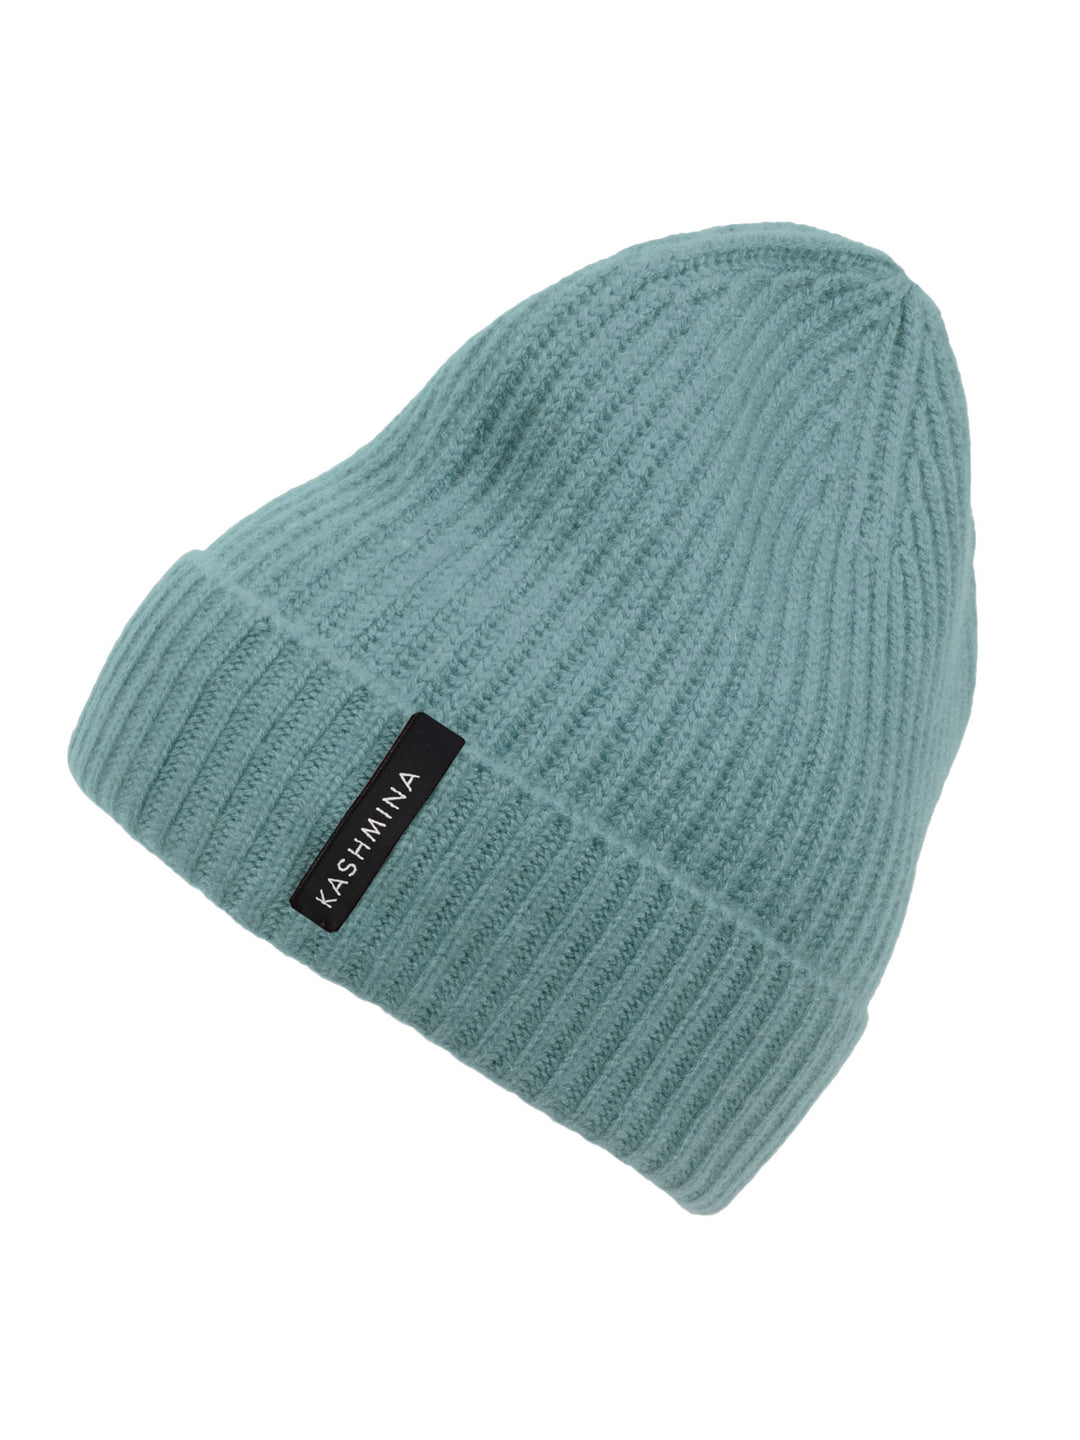 Cashmere cap "Elli", 100% pure cashmere, color: Arctic blue, knitted, non itching, soft, beanie, cap, Scandinavian design by Kashmina